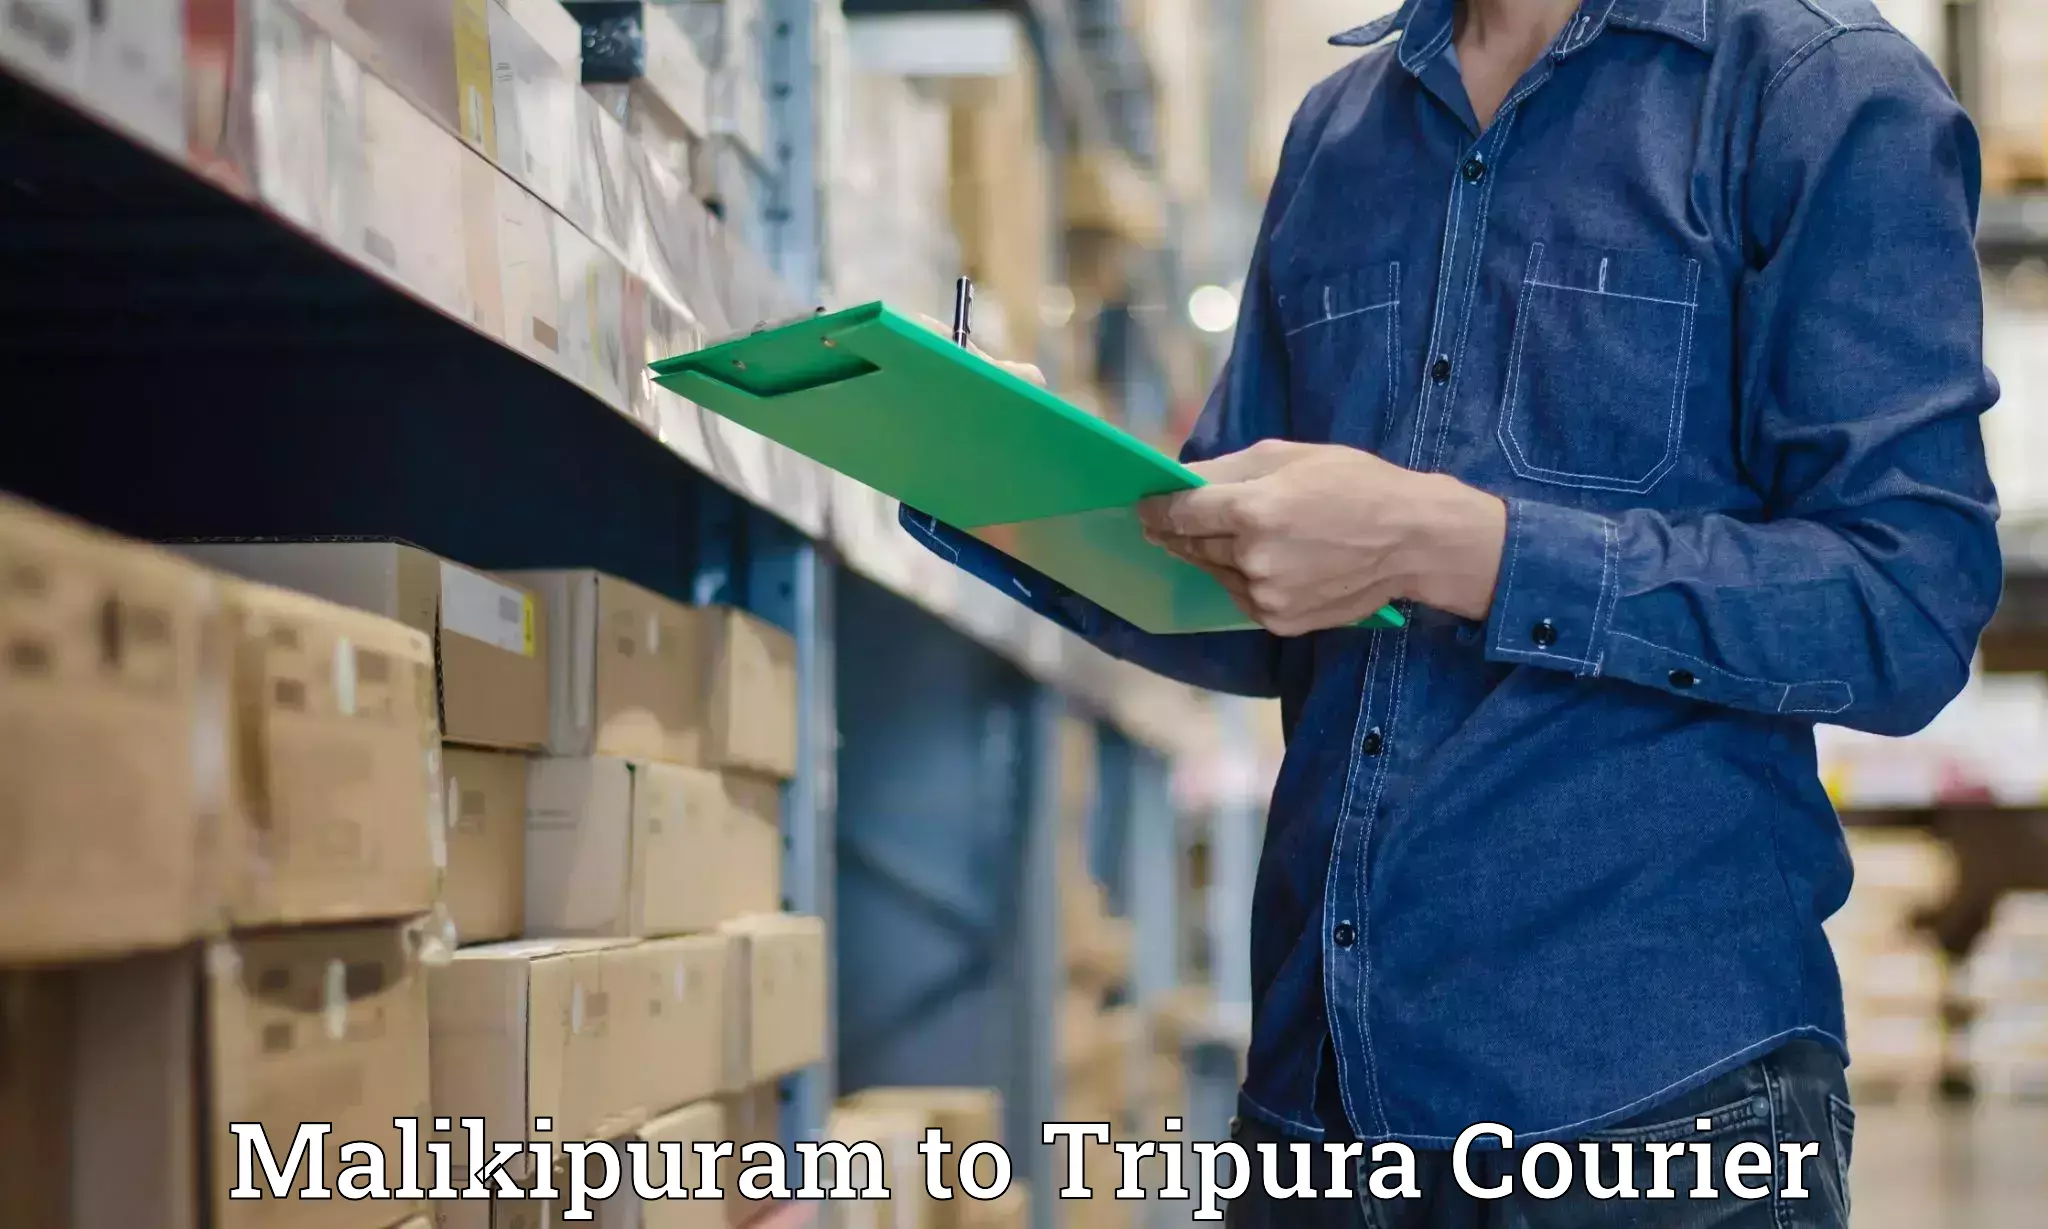 Efficient order fulfillment Malikipuram to Agartala